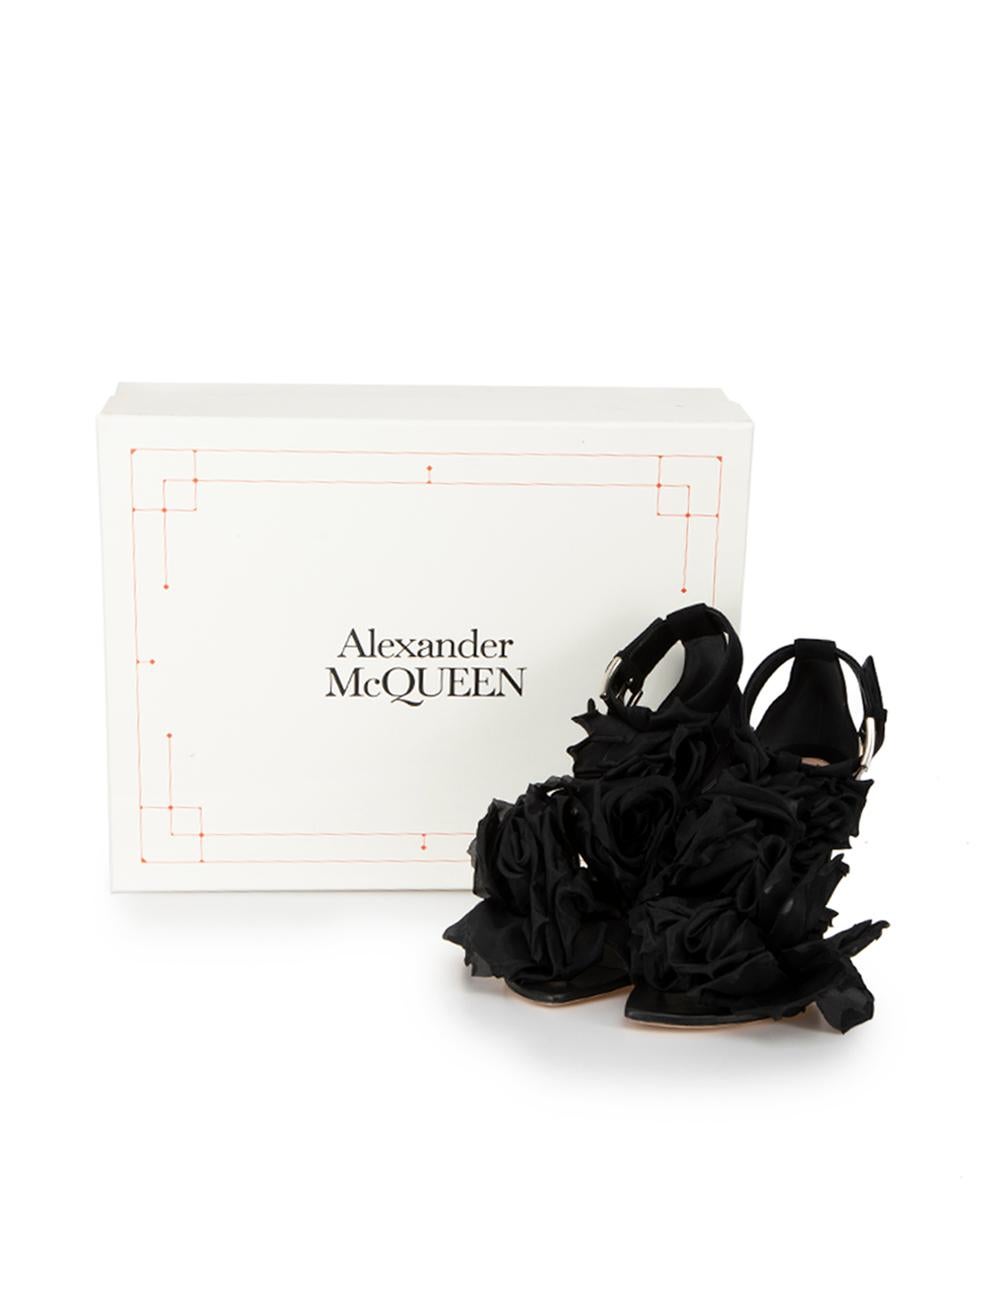 Alexander McQueen Black Suede Rose Accent Sandals Size IT 41 1